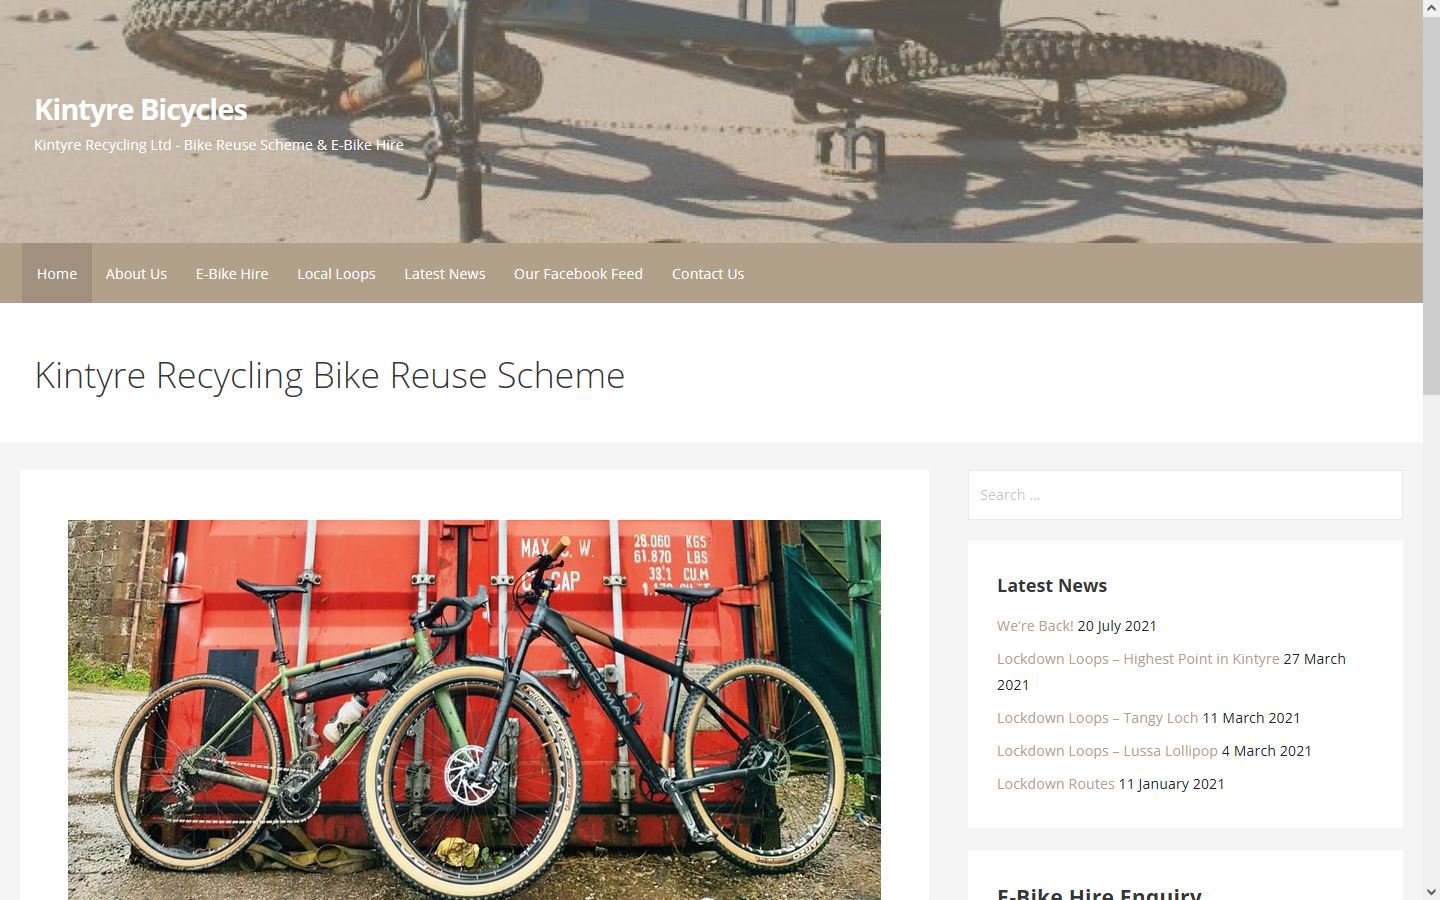 Kintyre-Recycling-Ltd-Bike-Reuse-Scheme